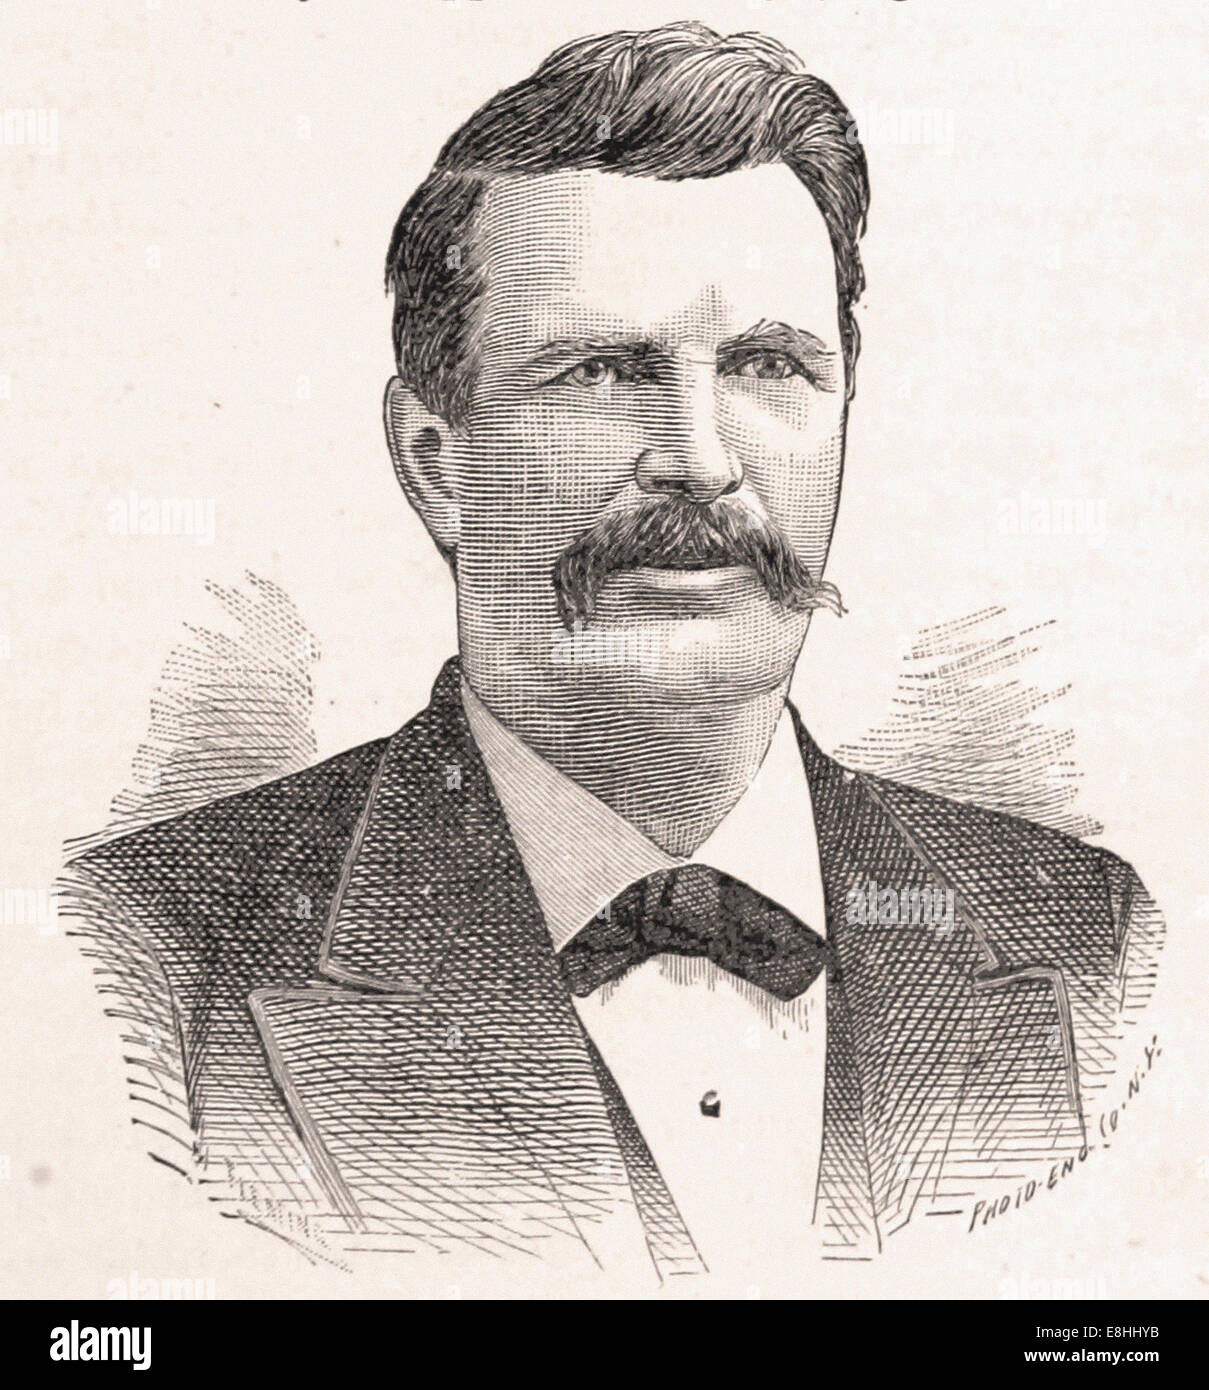 Porträt von Captain Henry W. Howgate - Gravur - XIX. Jahrhundert Stockfoto